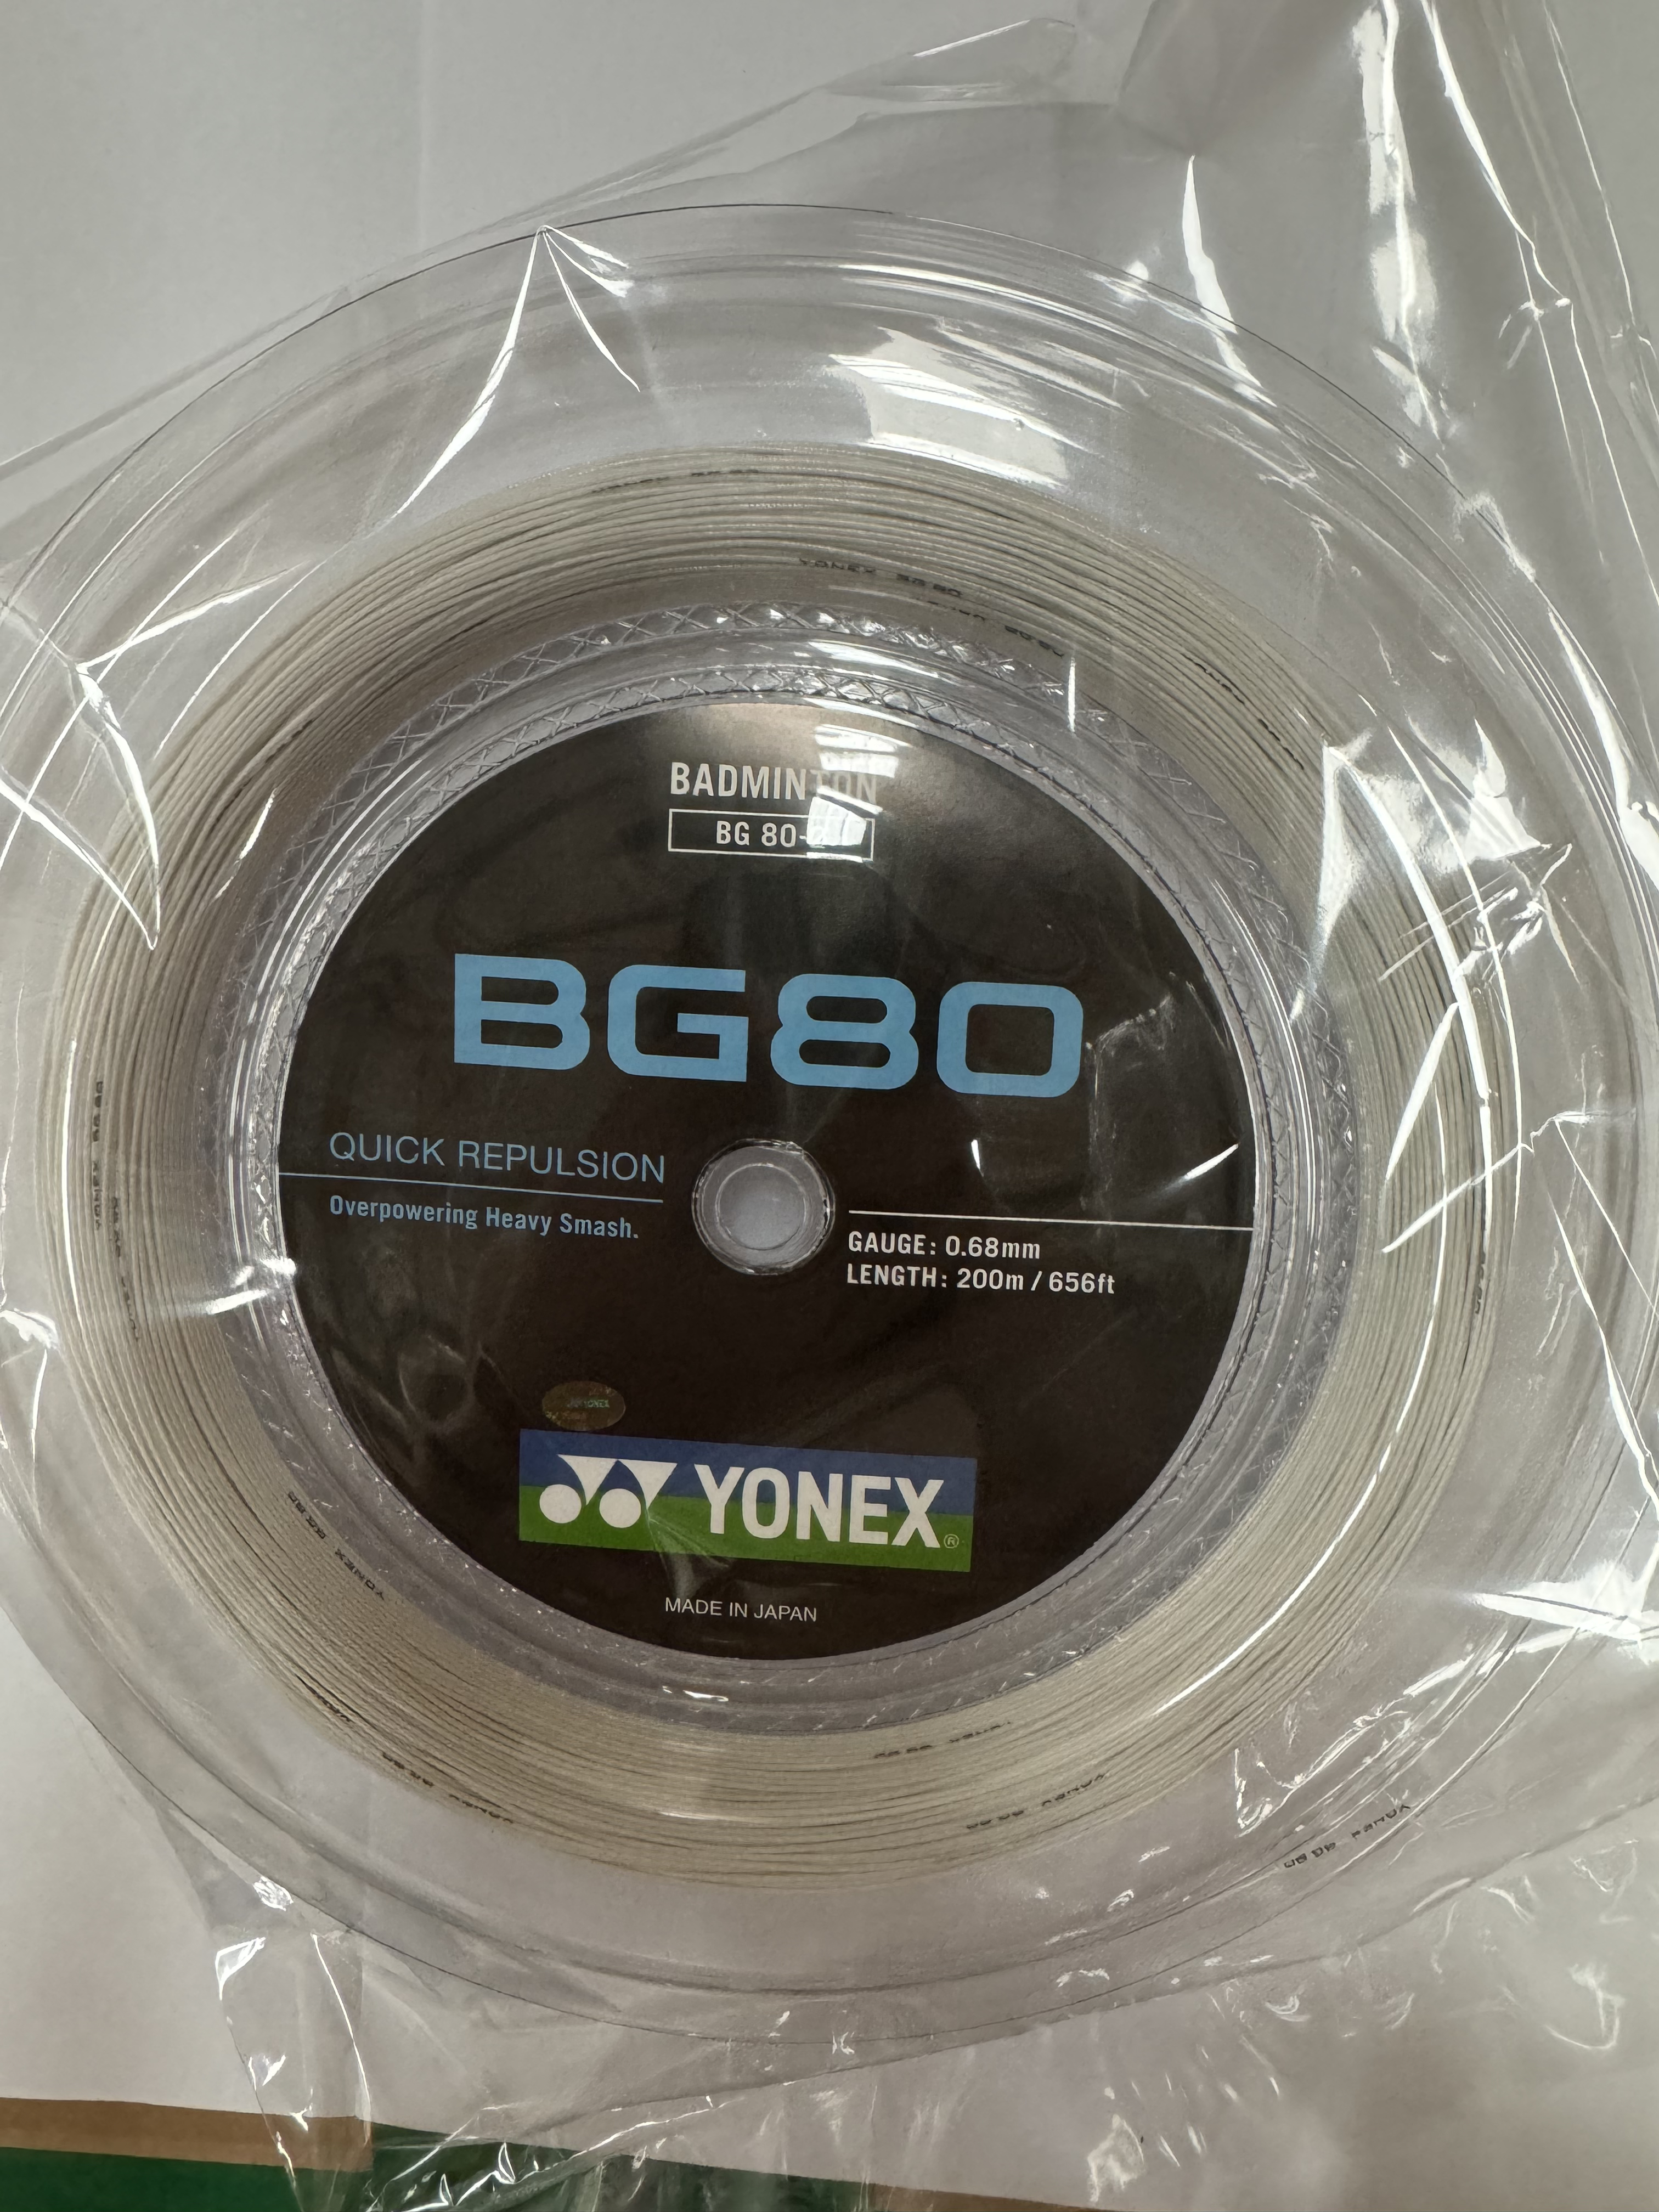 YONEX BG80 Badminton Coil String, BG80-2, 200m - variety colours